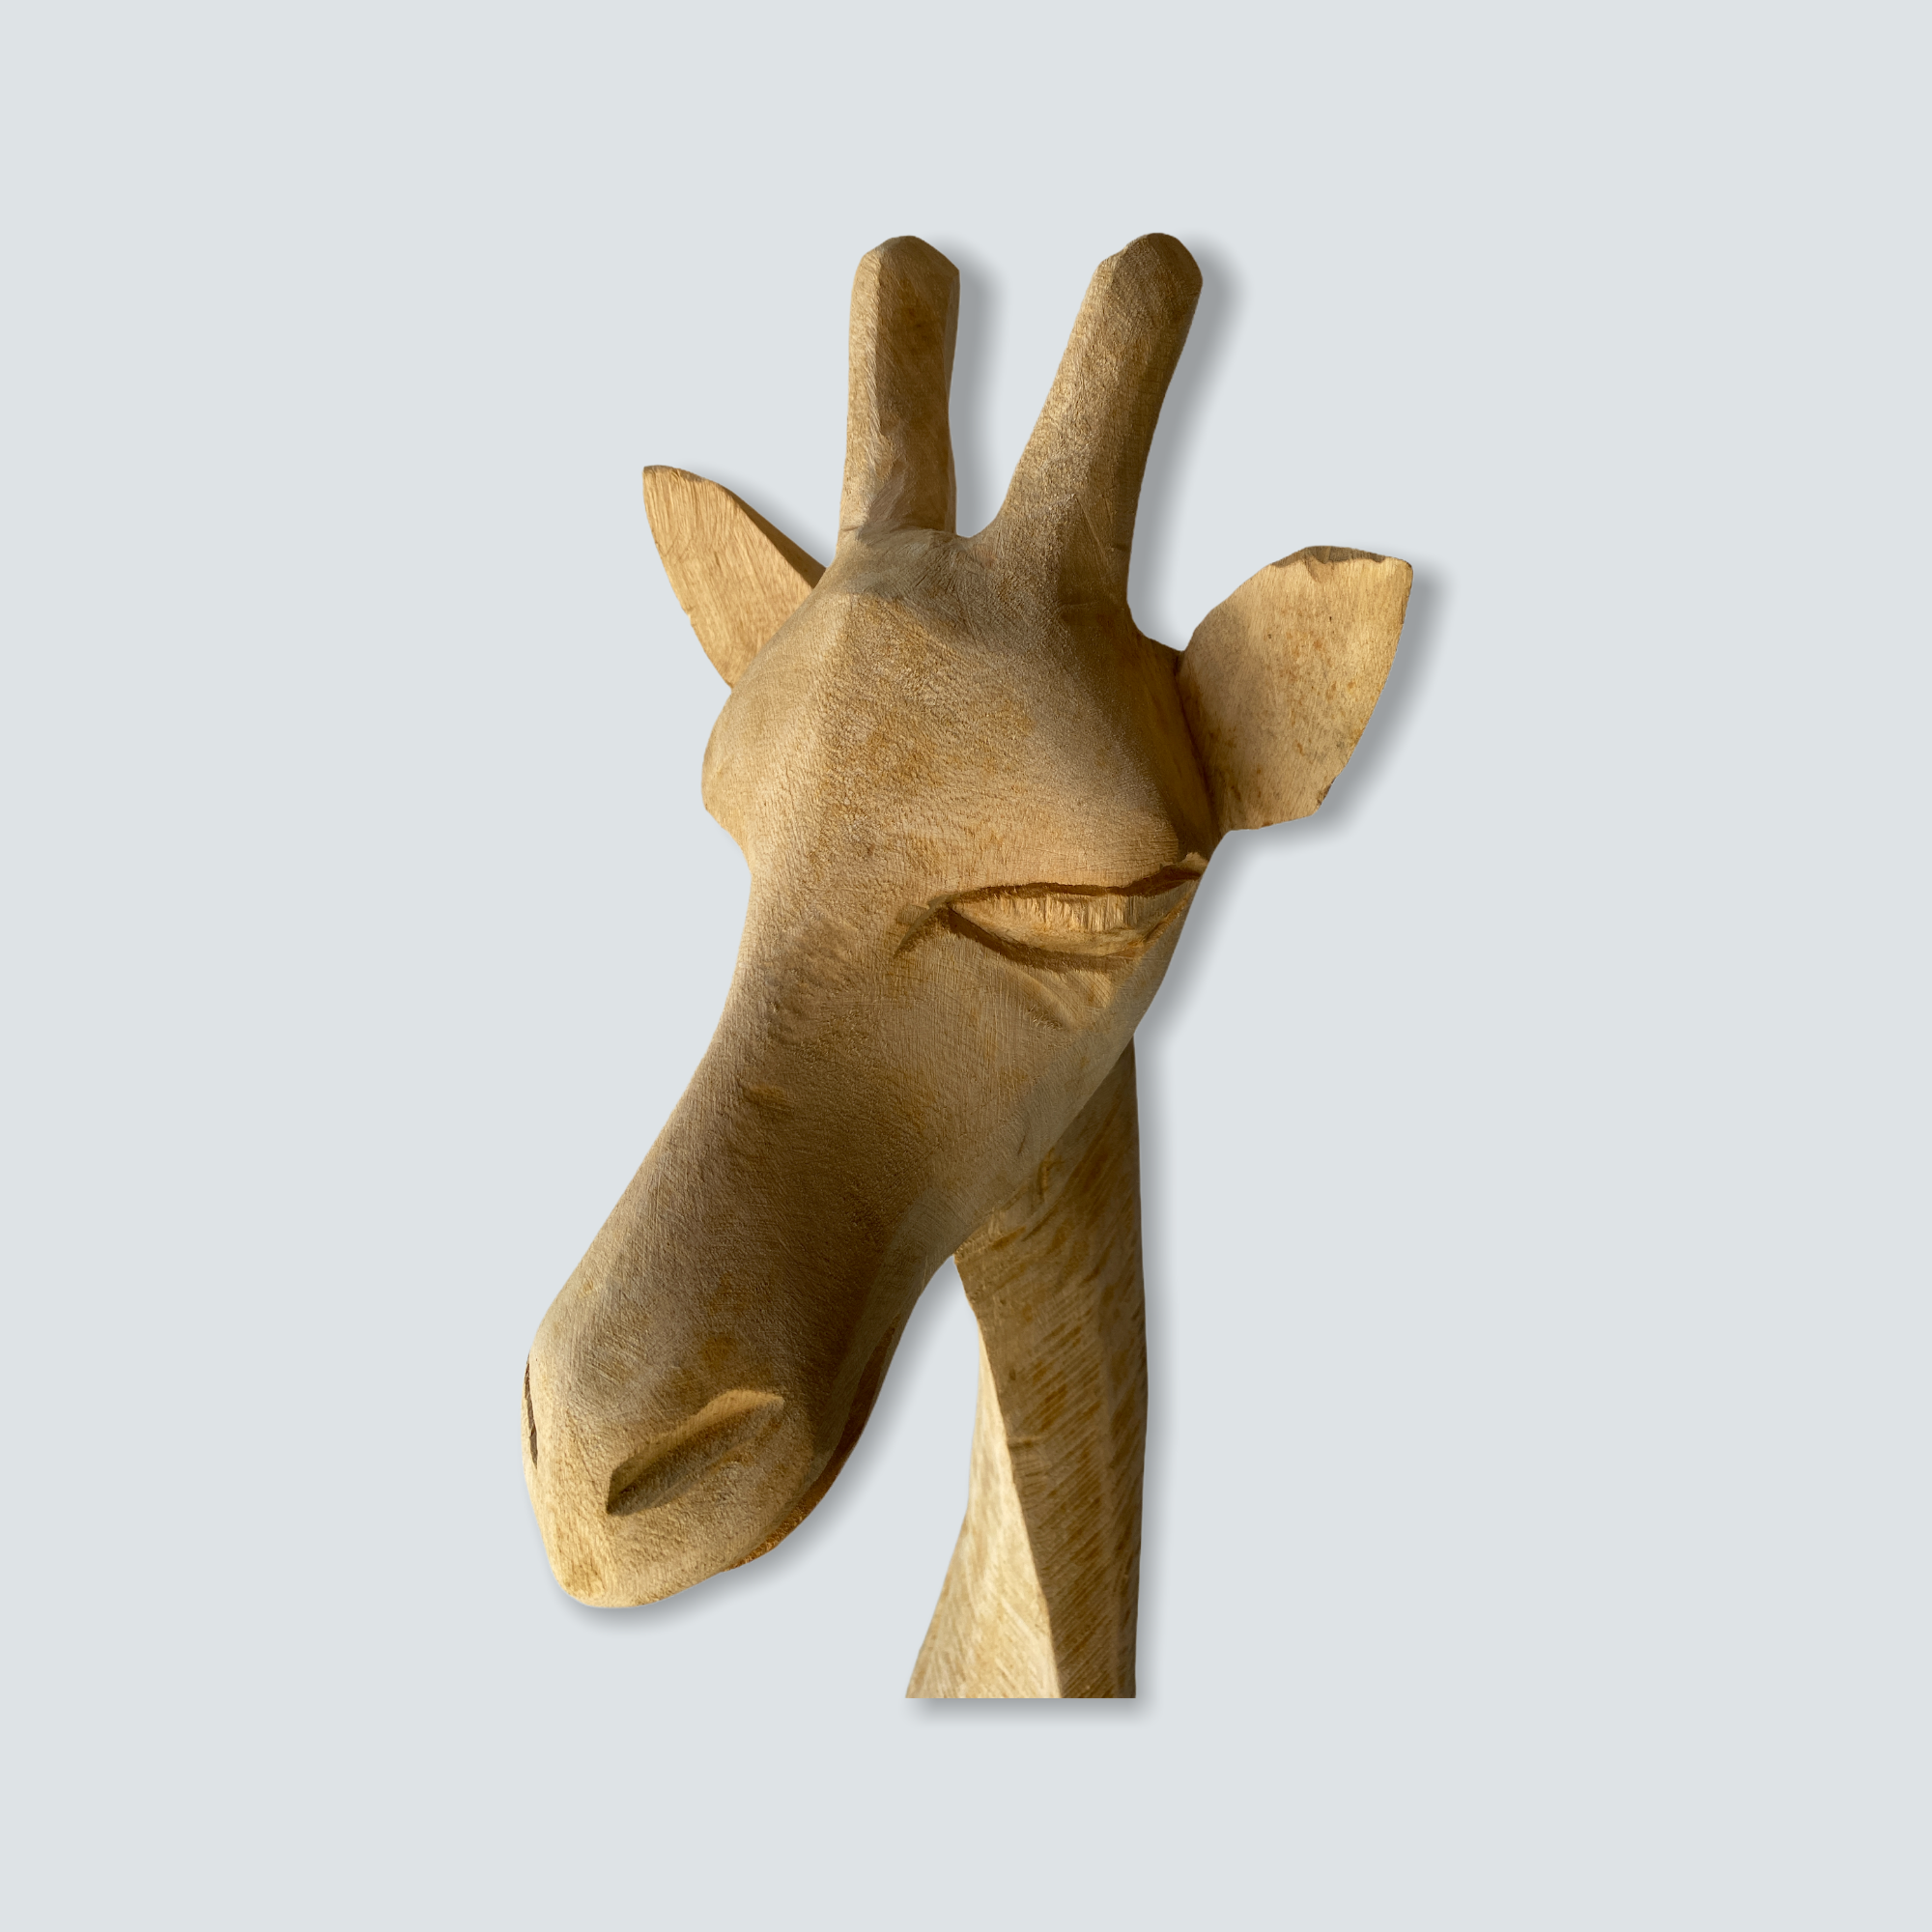 Swazi Giraffe-head sculptures - wood - S